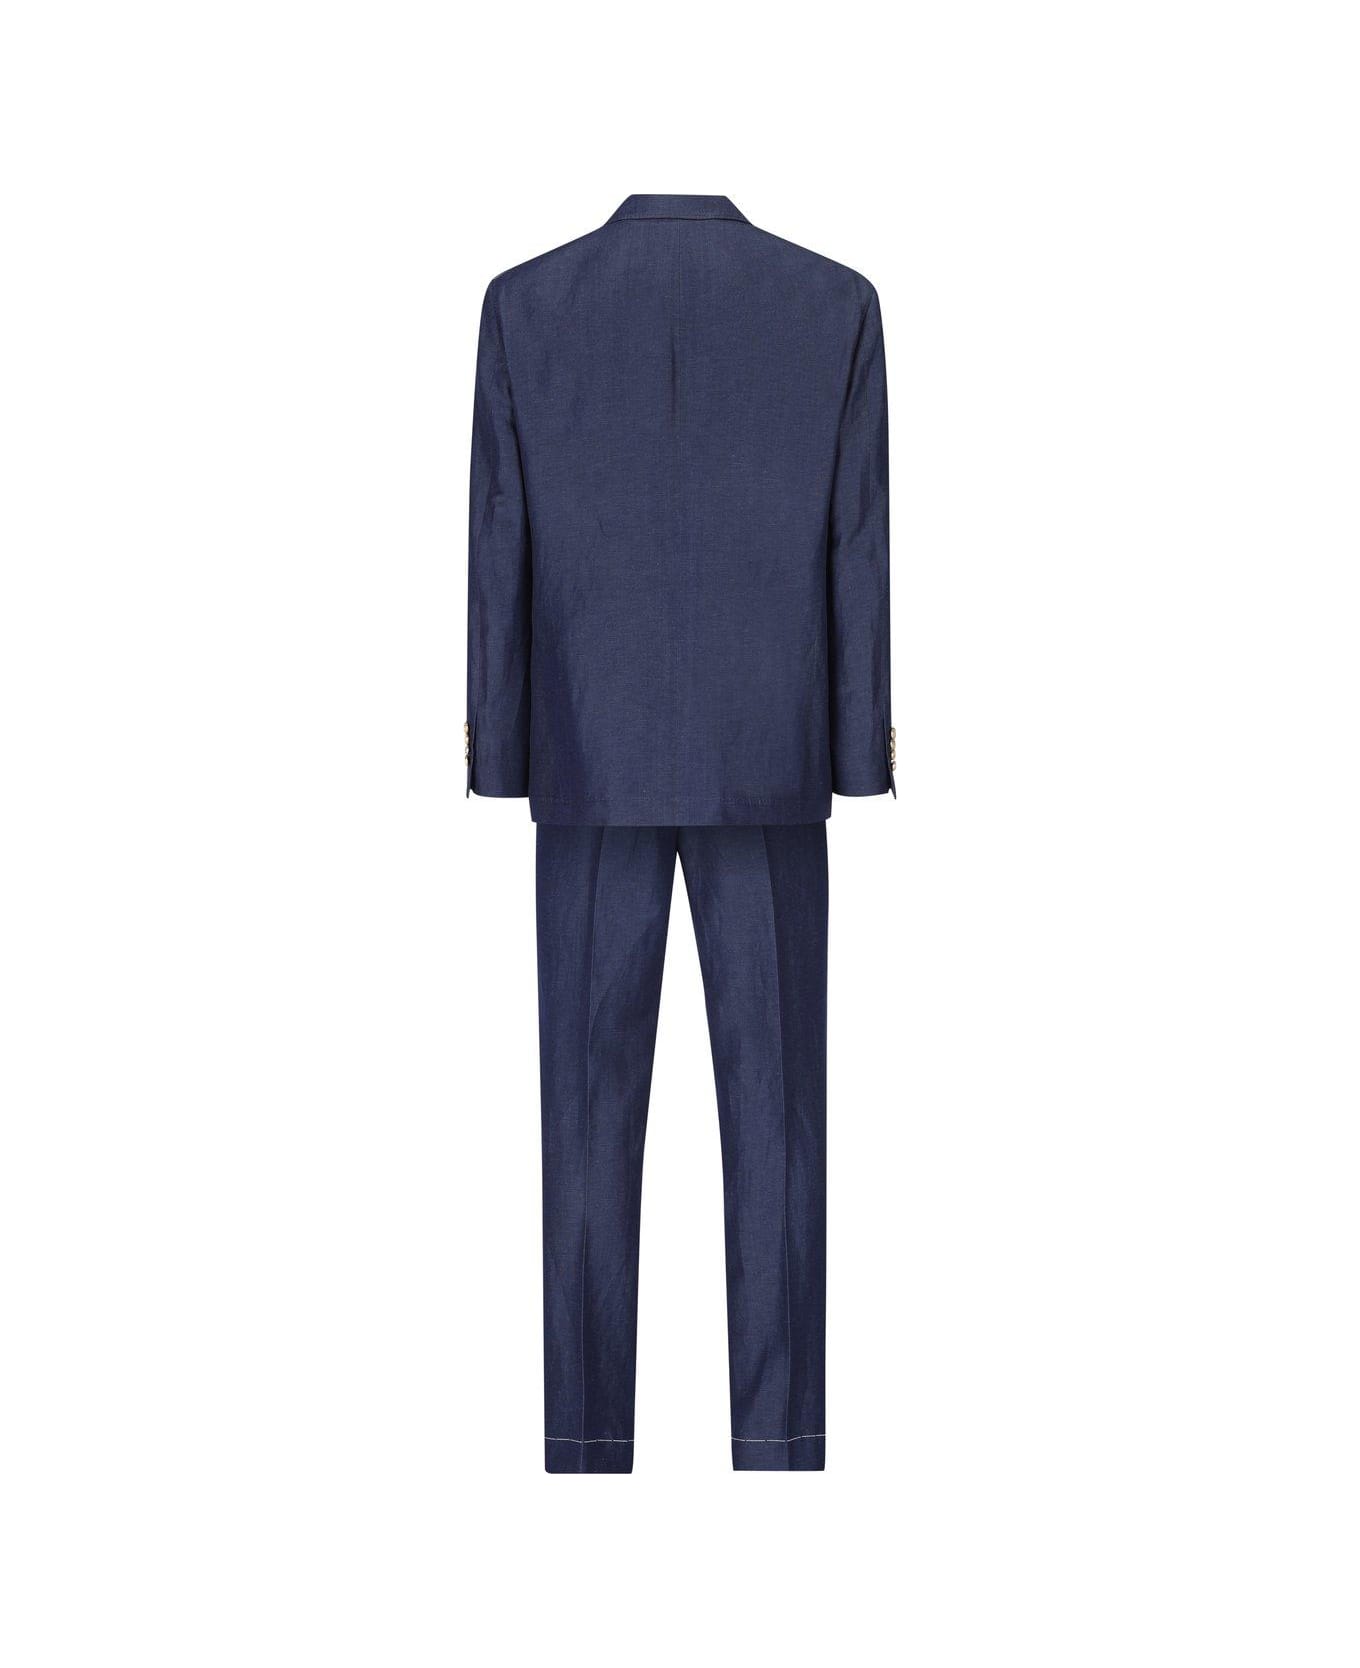 Brunello Cucinelli Double-breasted Suit - BLU スーツ